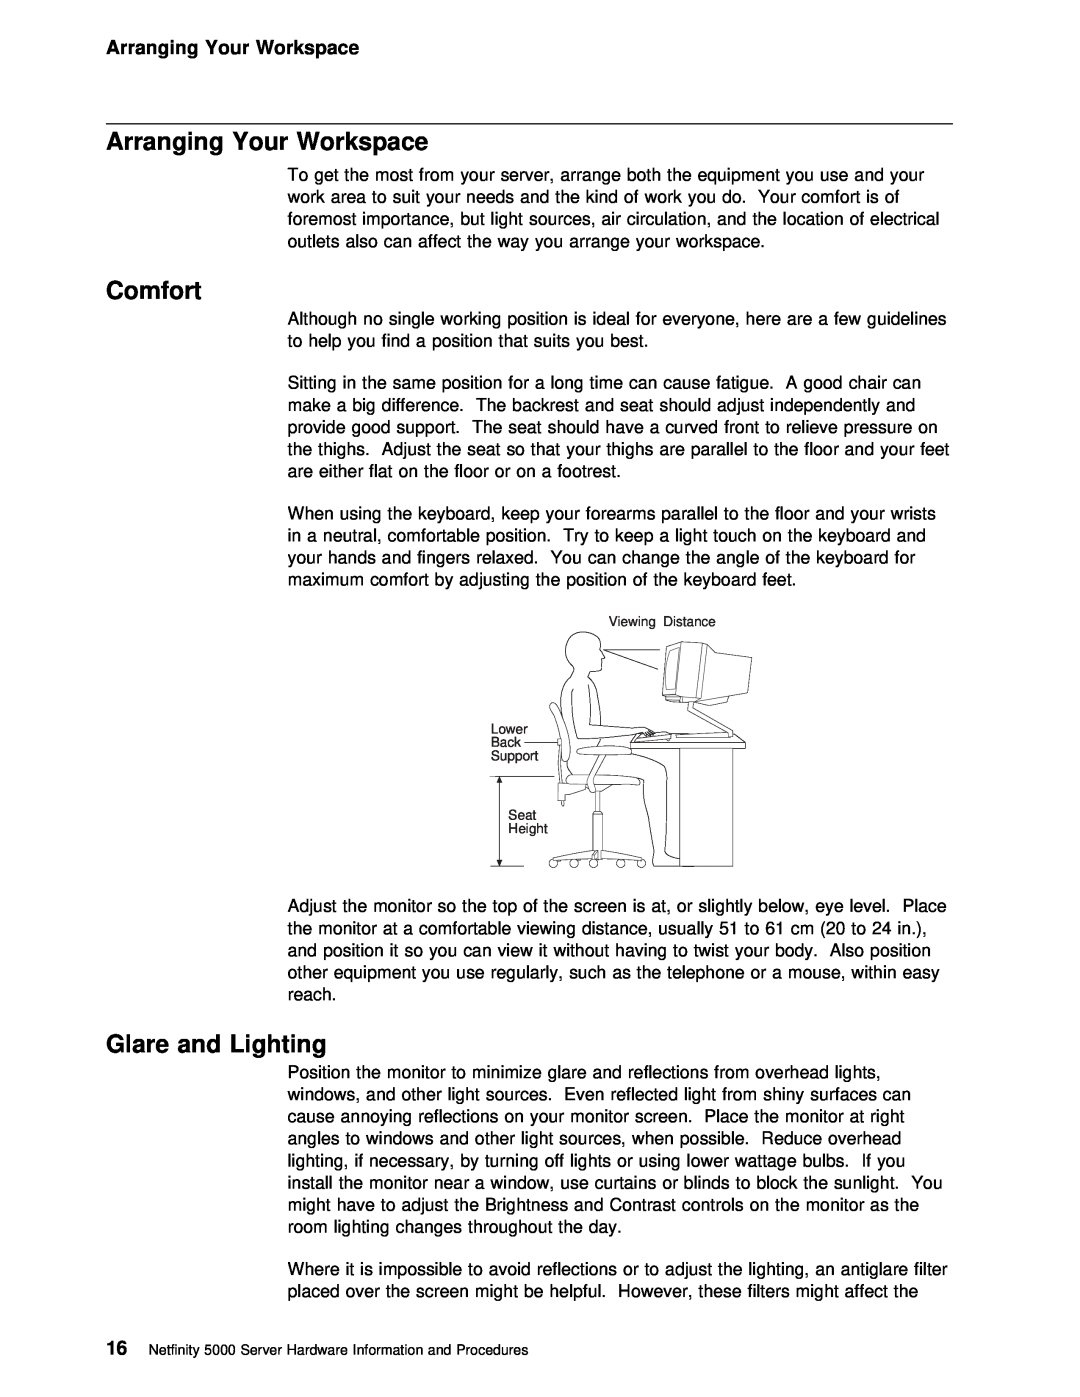 IBM 5000 manual Arranging Your Workspace, Comfort, Glare and Lighting, maximum 